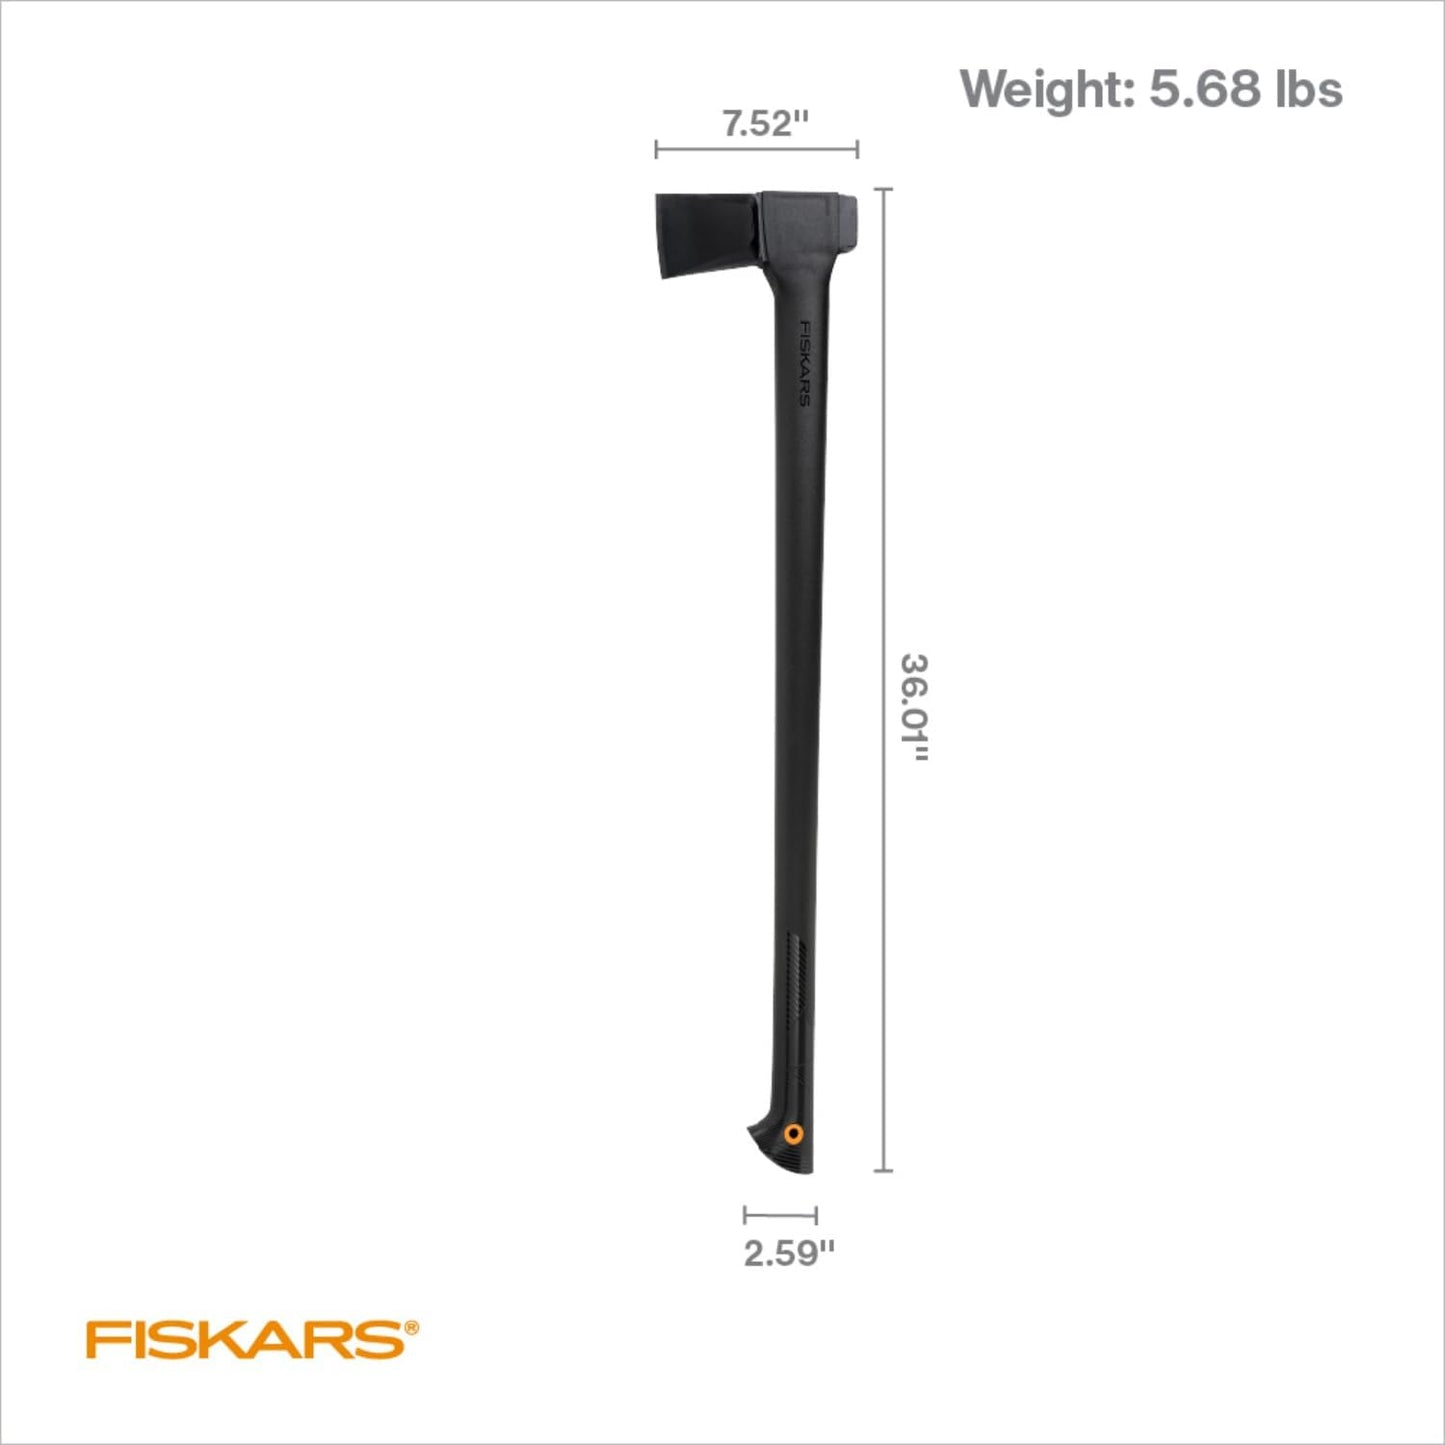 Fiskars Super Splitting Axe (36') - Wood Splitter for Medium to Large Size Logs with 36' FiberComp Handle - Black